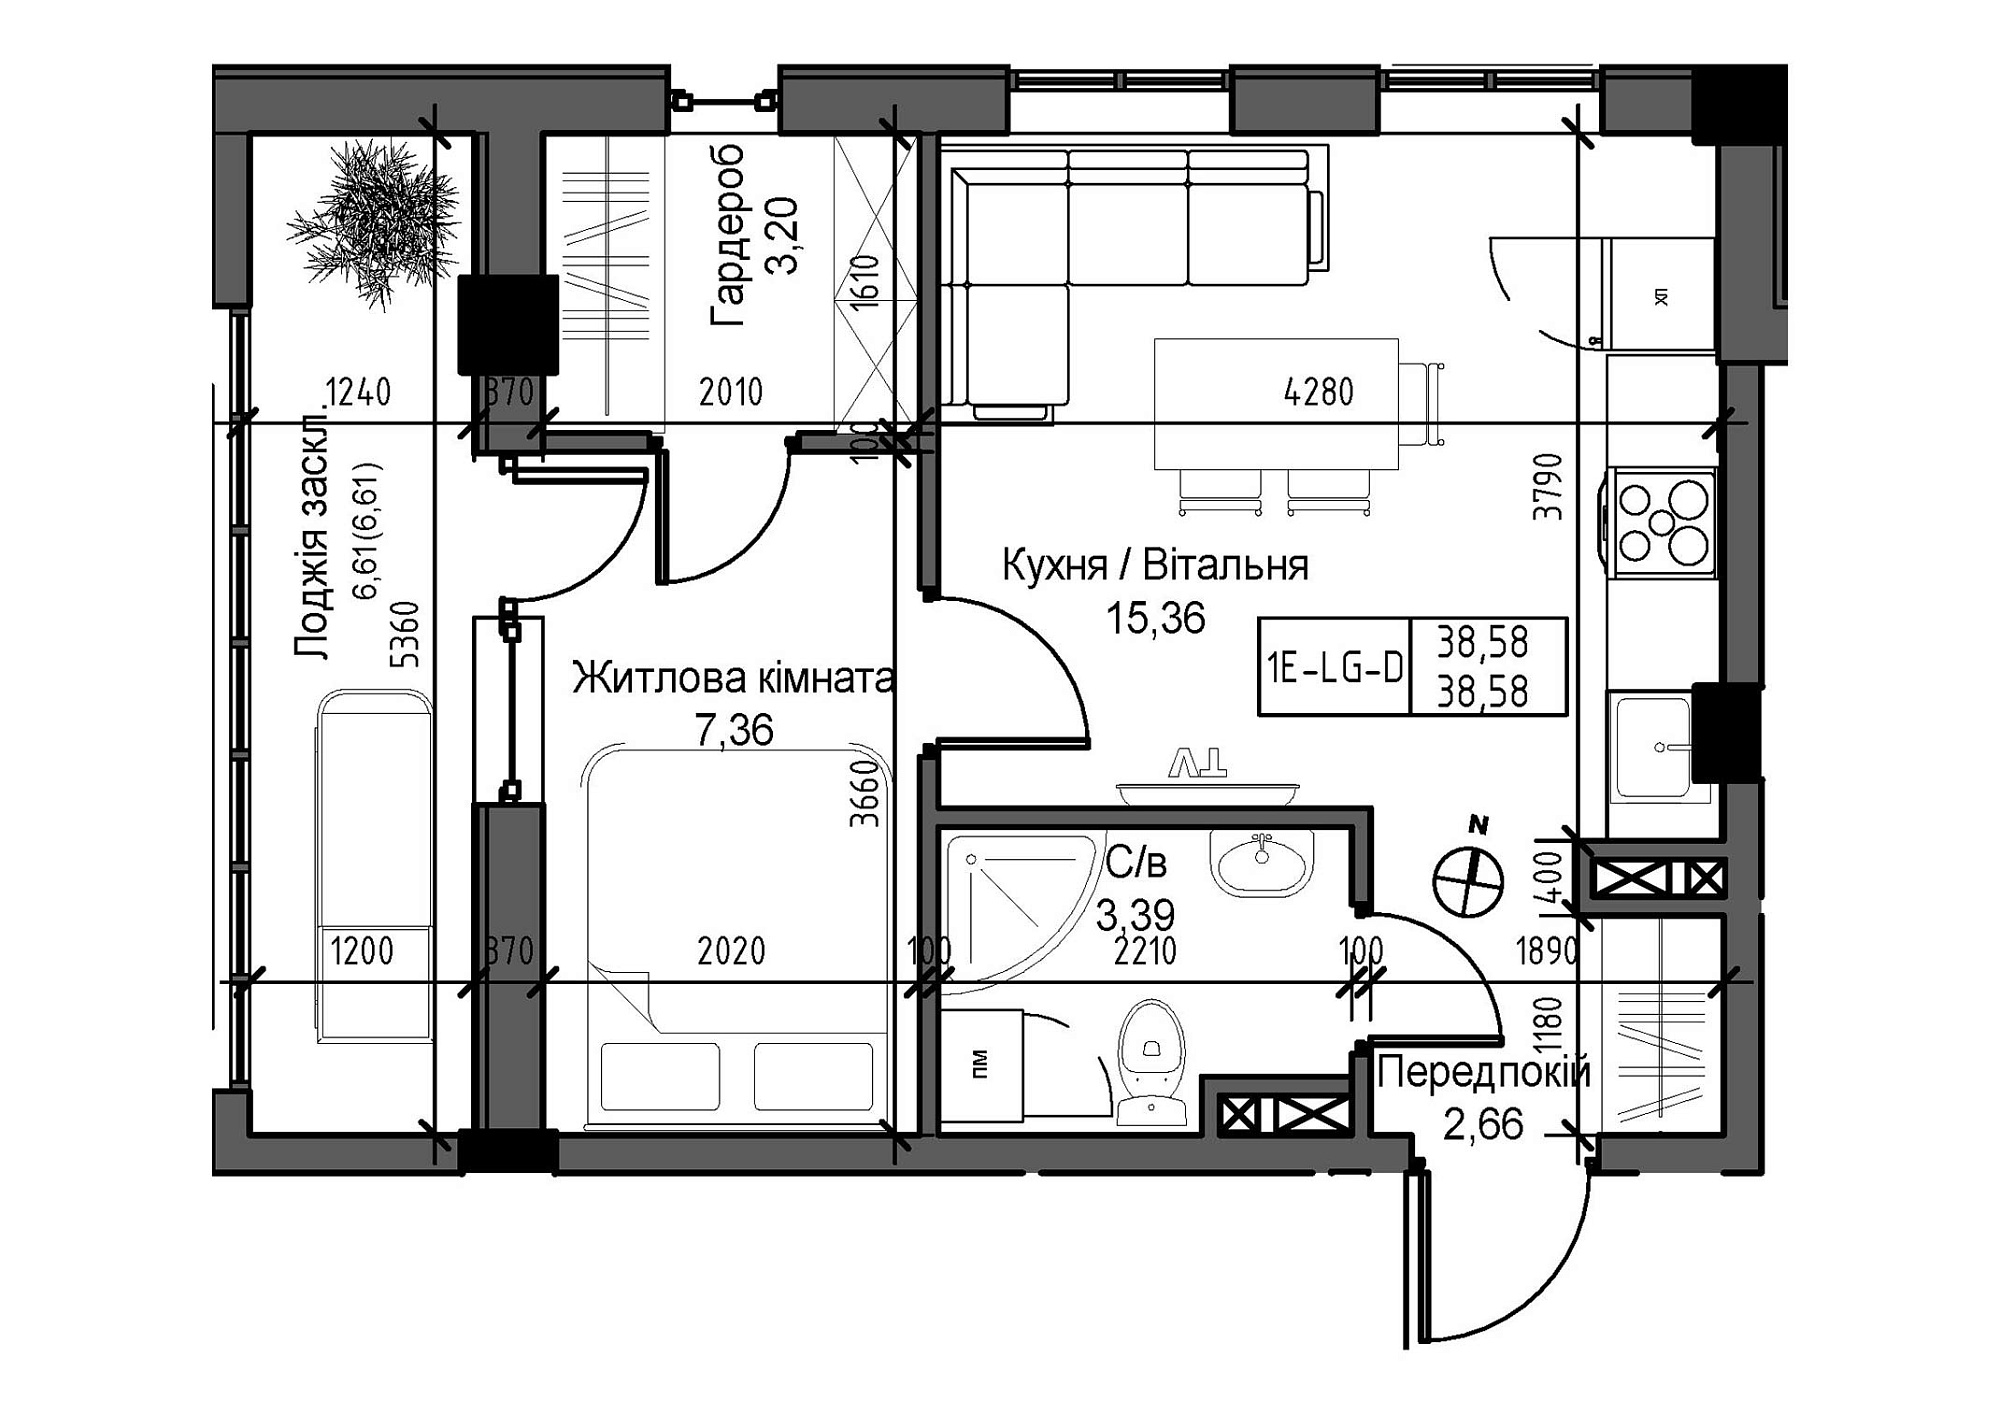 Planning 1-rm flats area 38.58m2, UM-007-03/0002.